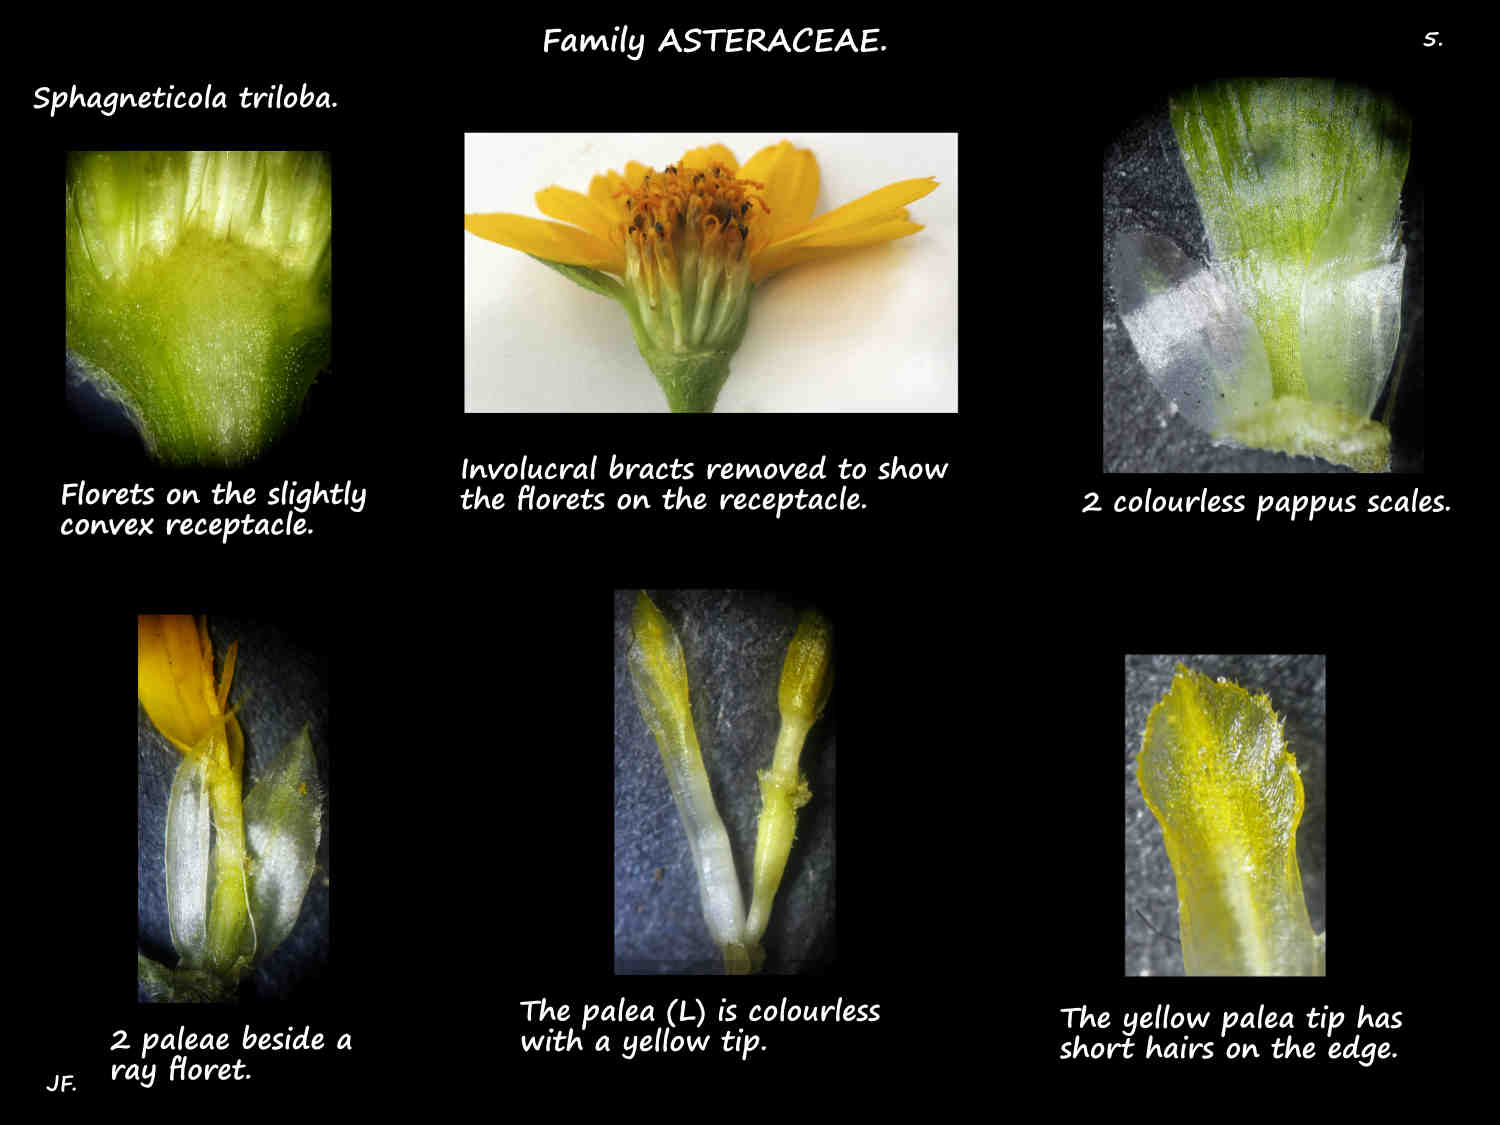 5 The pappus & paleae of a Sphagneticola triloba capilitum